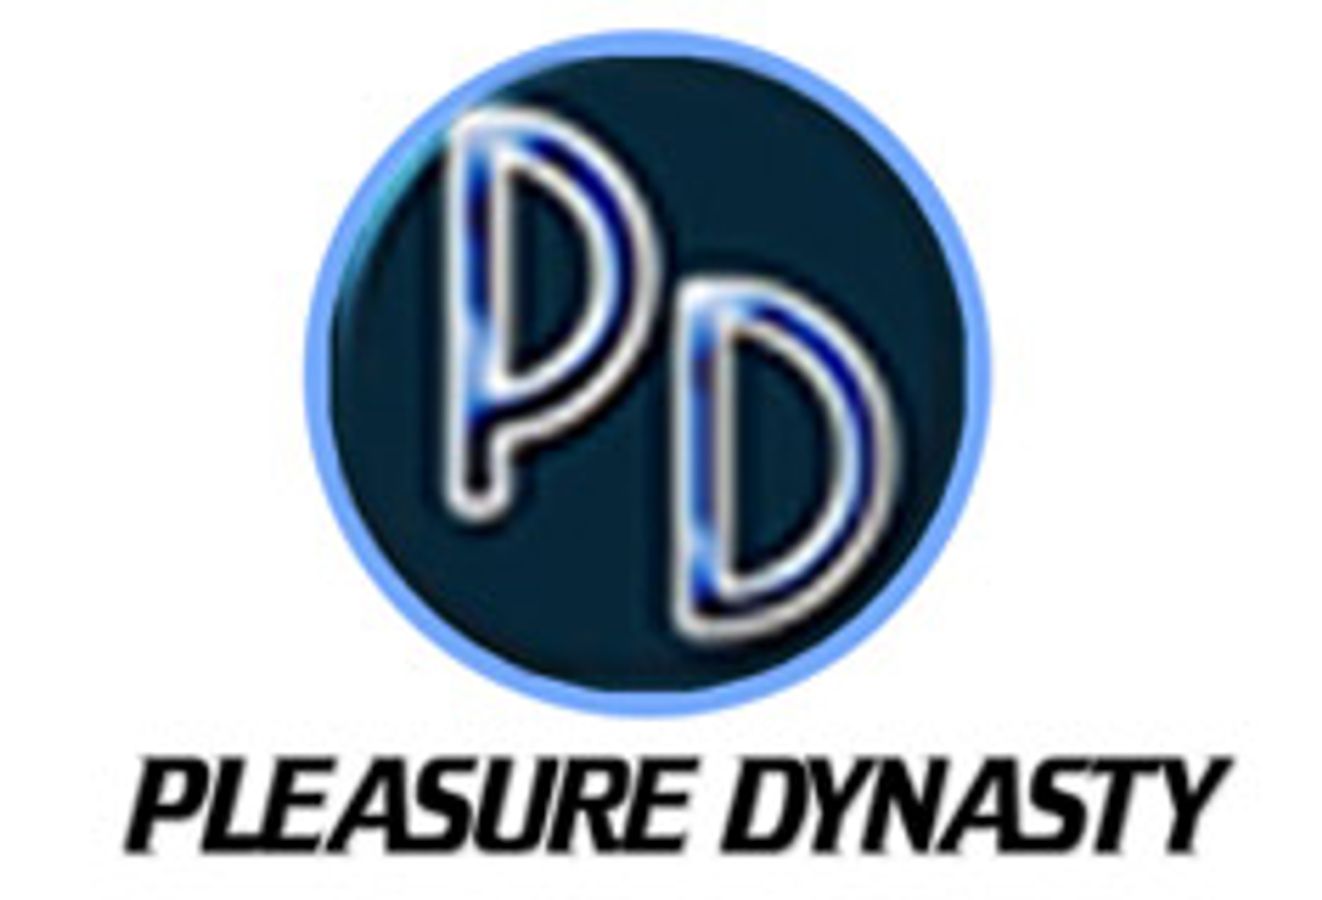 Pleasure Dynasty